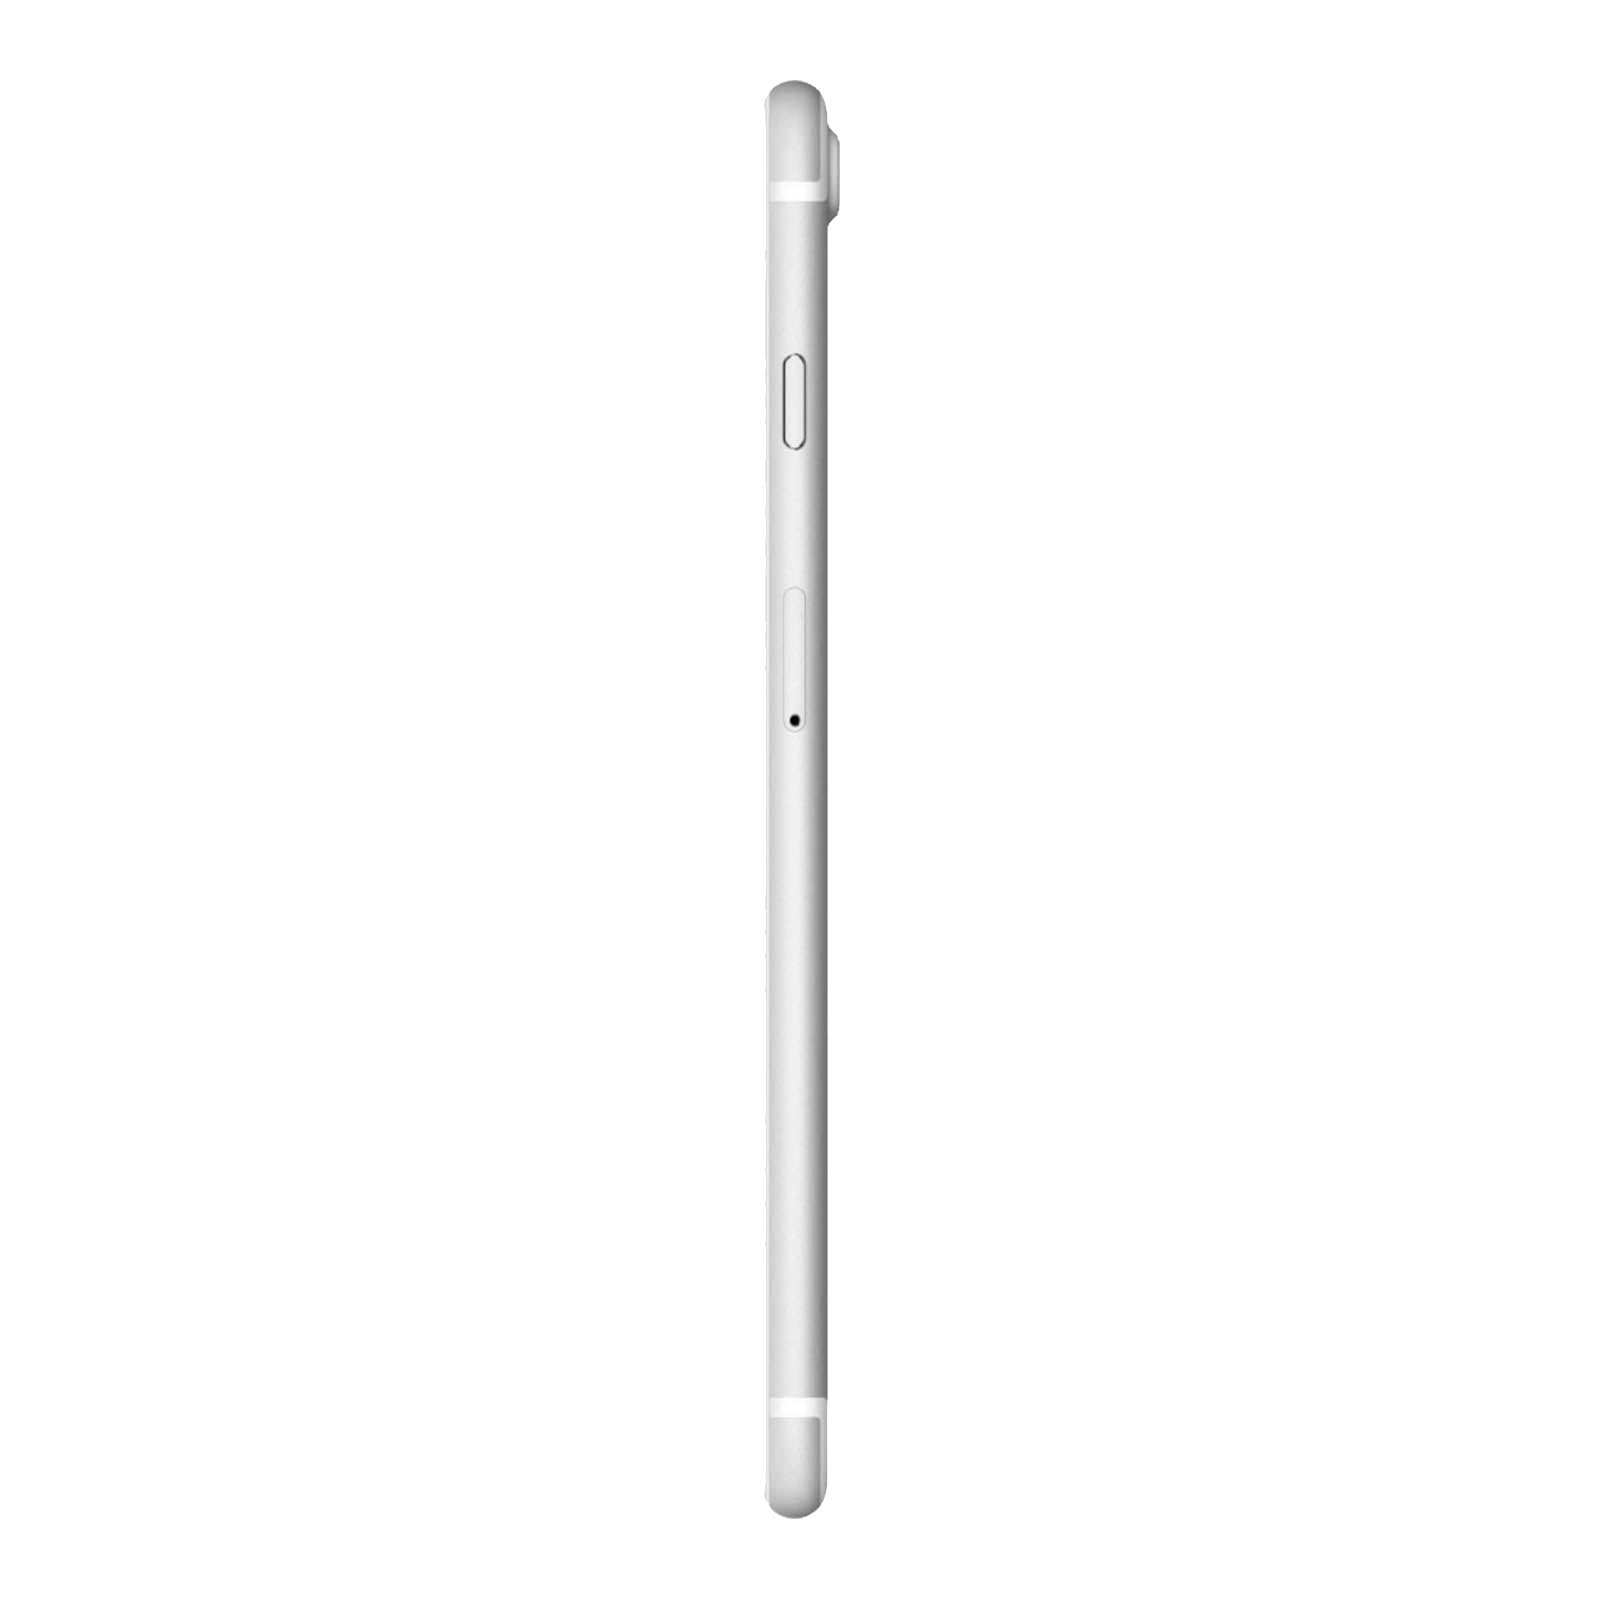 Apple iPhone 7 Plus 32GB Silber Makellos - Ohne Vertrag